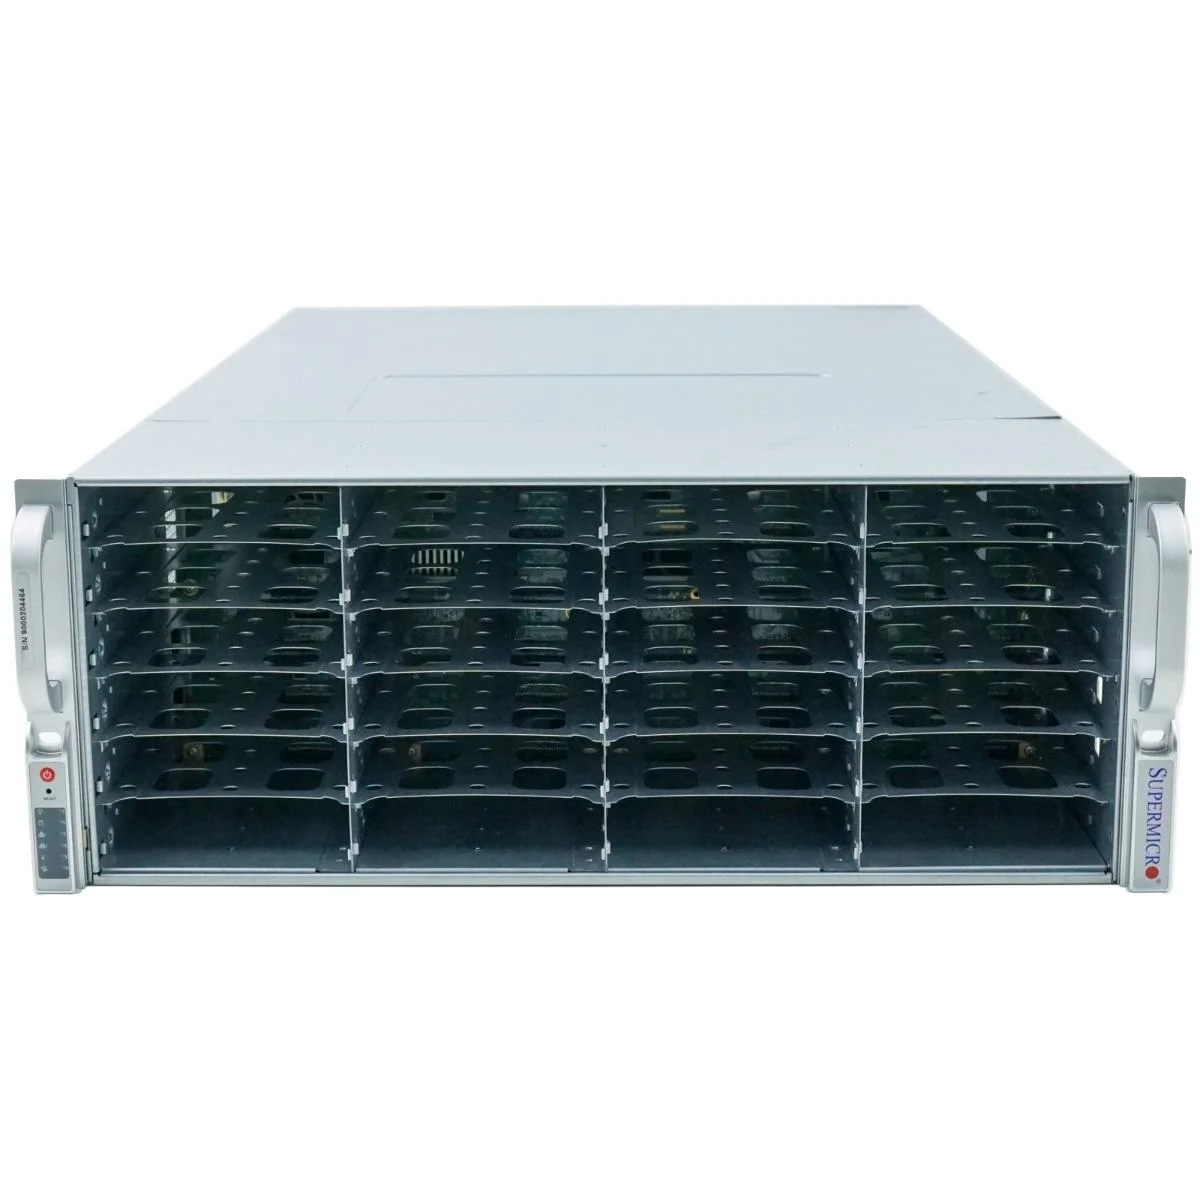 Supermicro CSE-847 X11DPi-N 4U Rack Server